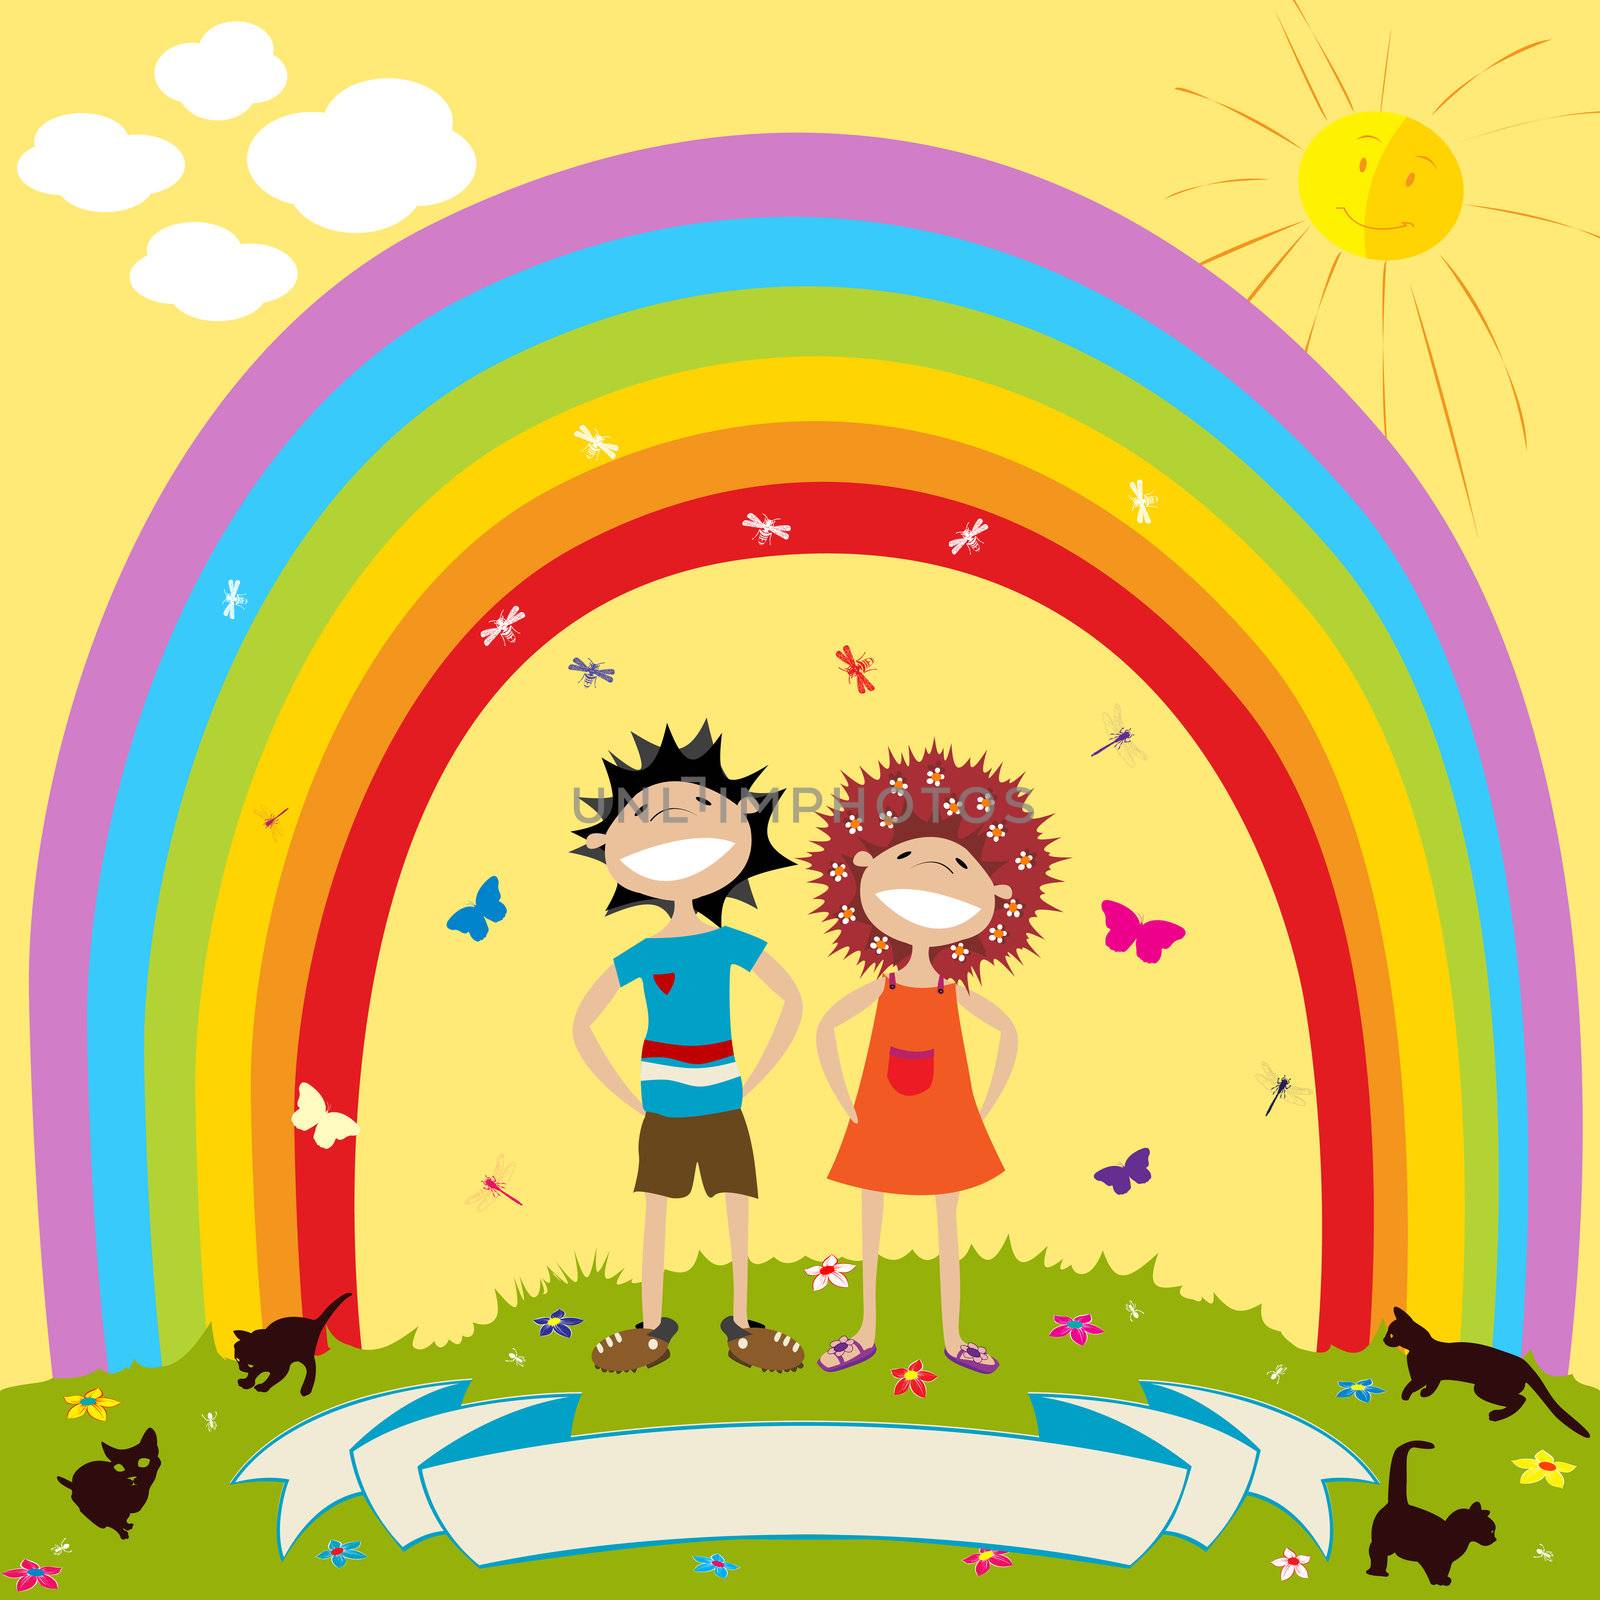 Children and rainbow by Lirch